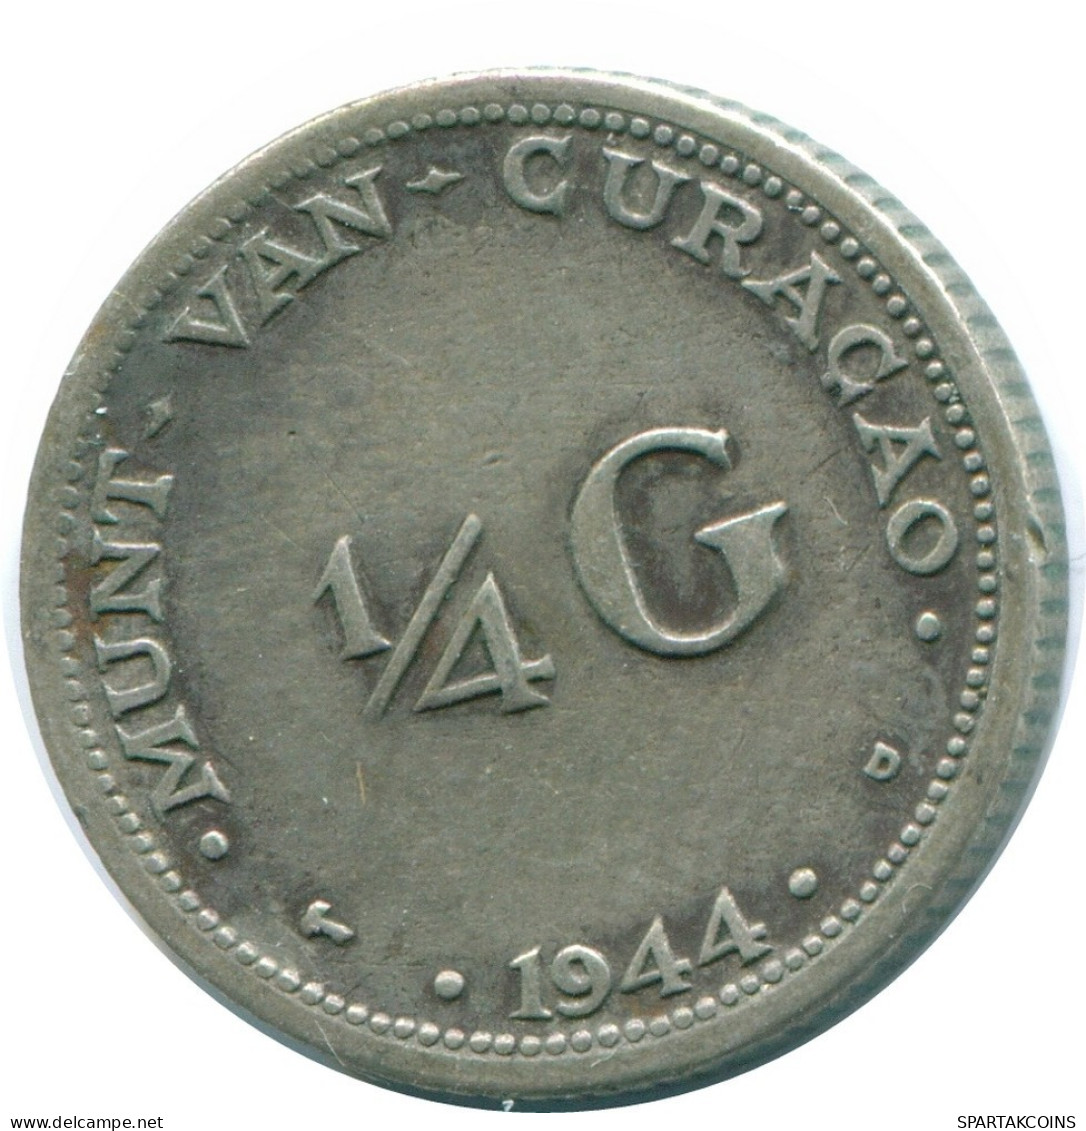 1/4 GULDEN 1944 CURACAO Netherlands SILVER Colonial Coin #NL10603.4.U.A - Curacao